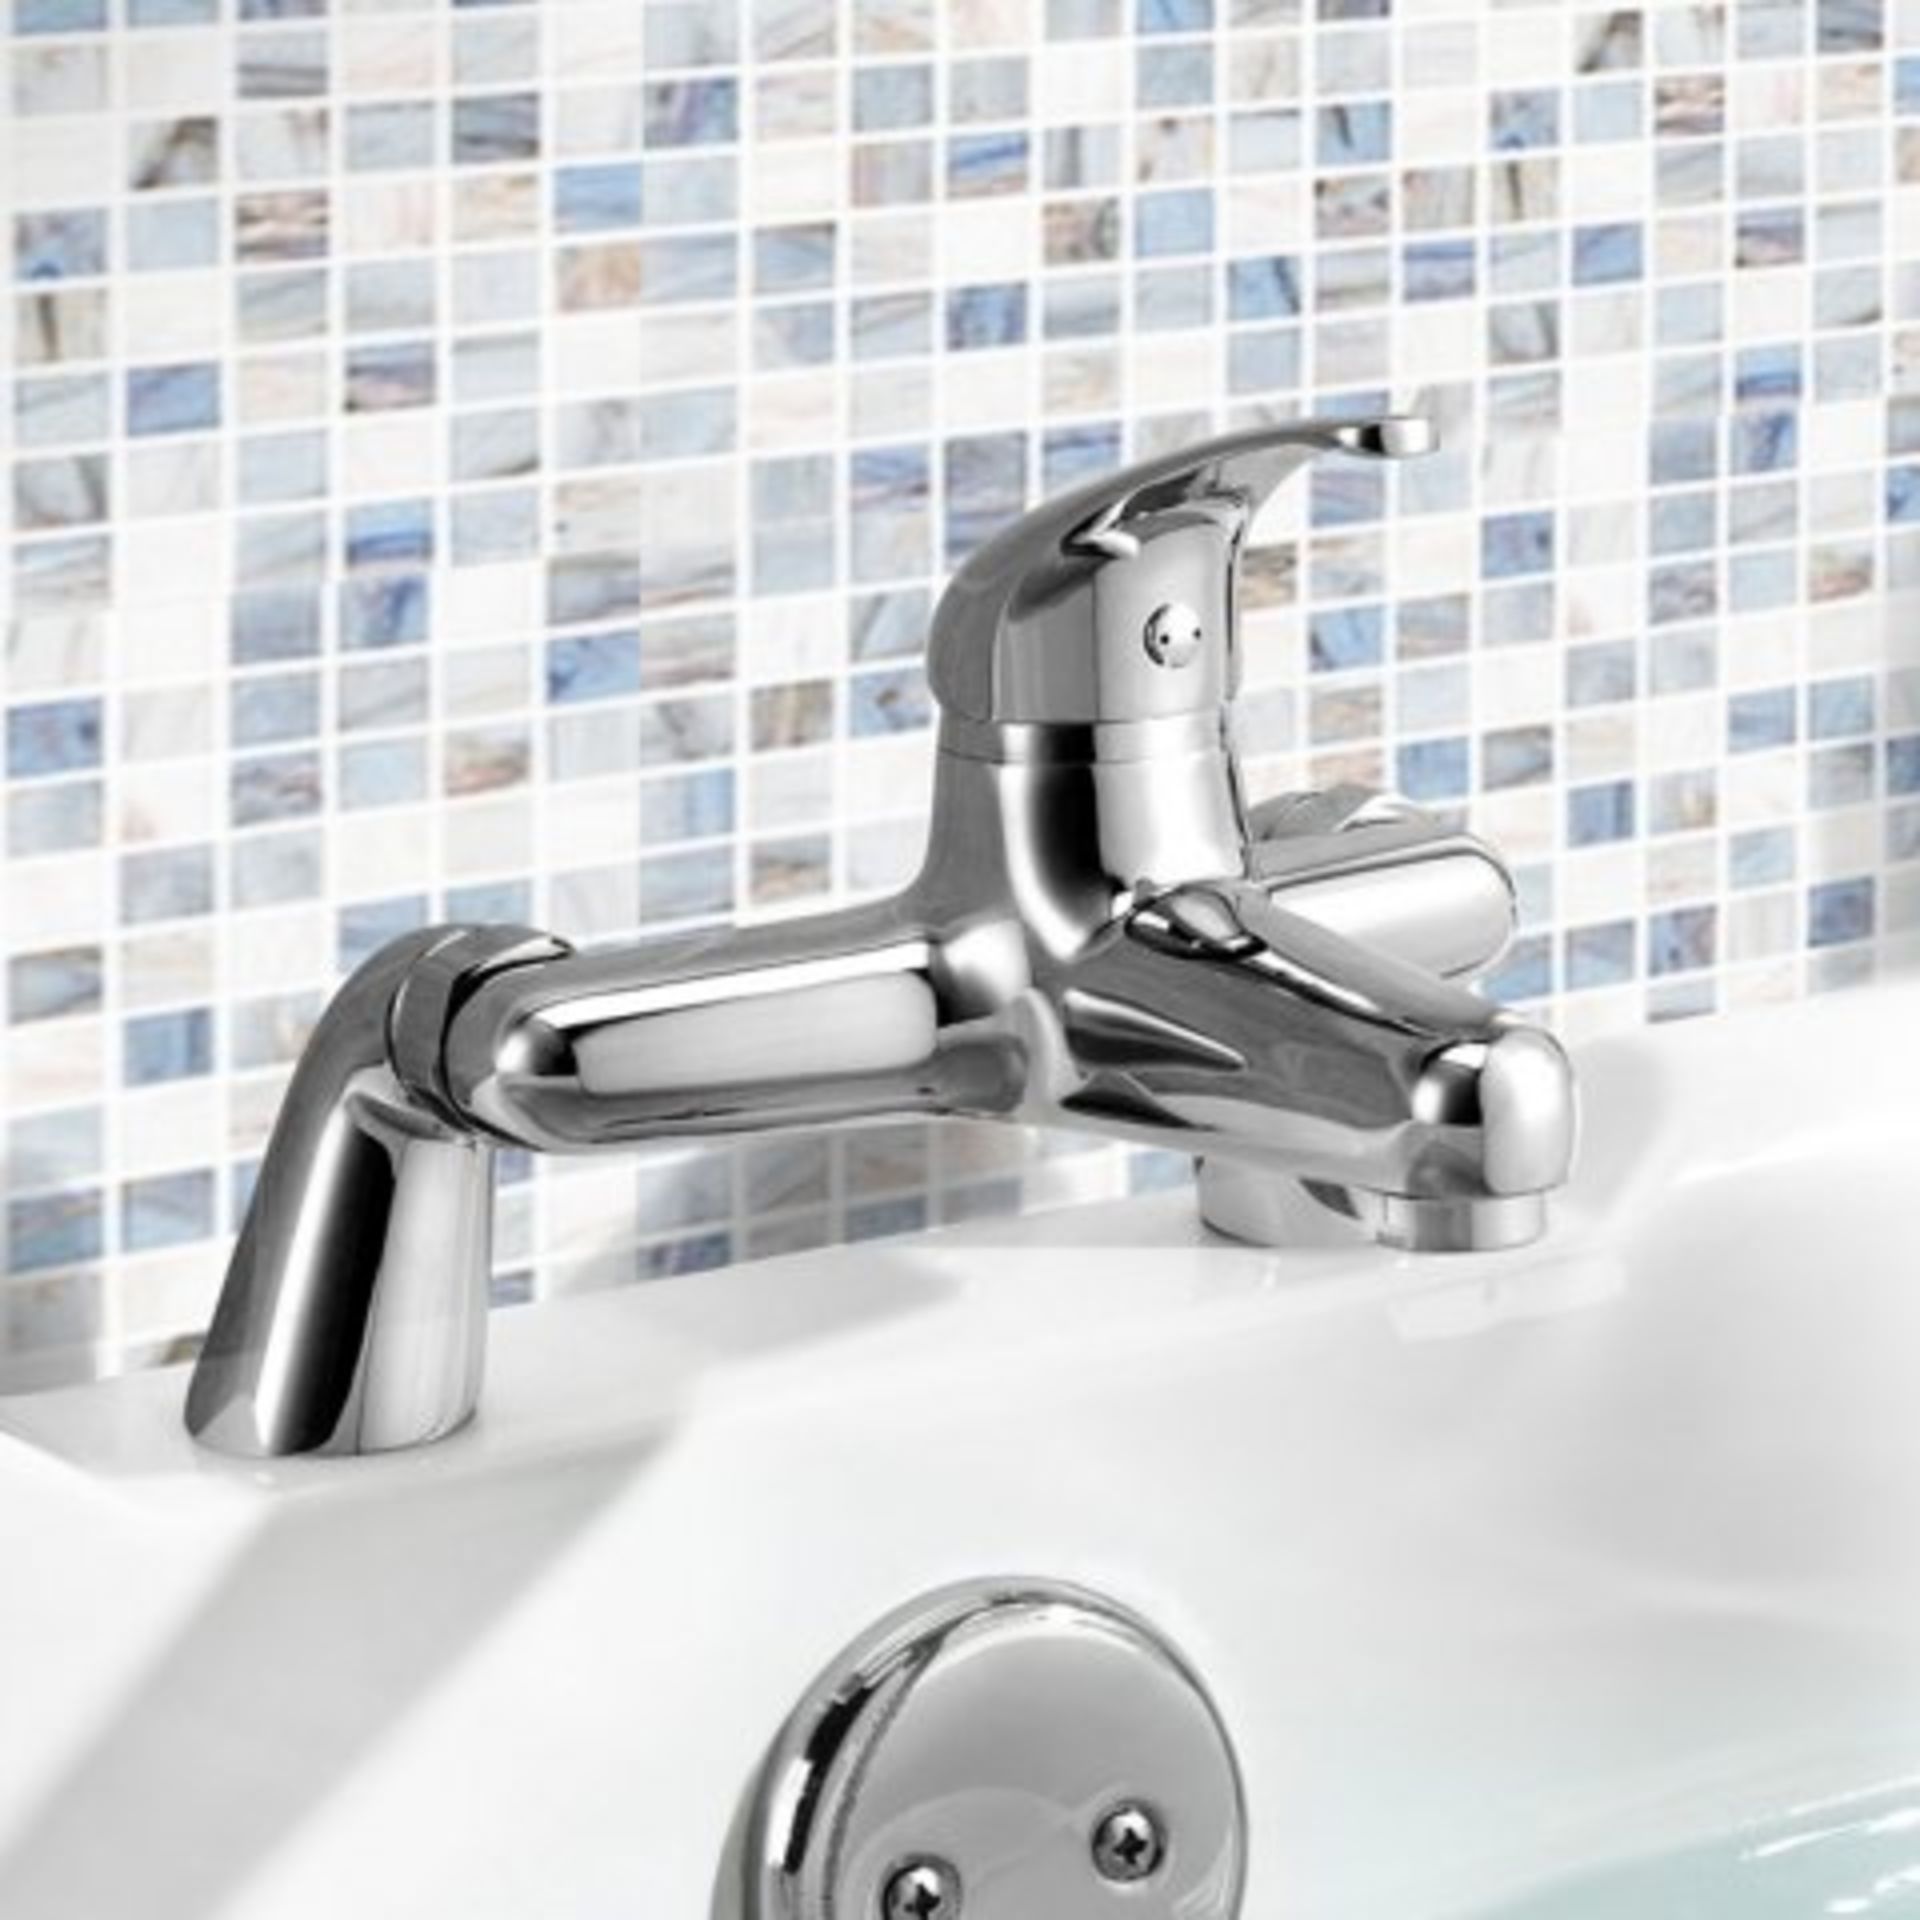 (I62) Sleek Modern Bathroom Chrome Bath Filler Lever Mixer Tap Presenting a contemporary design,